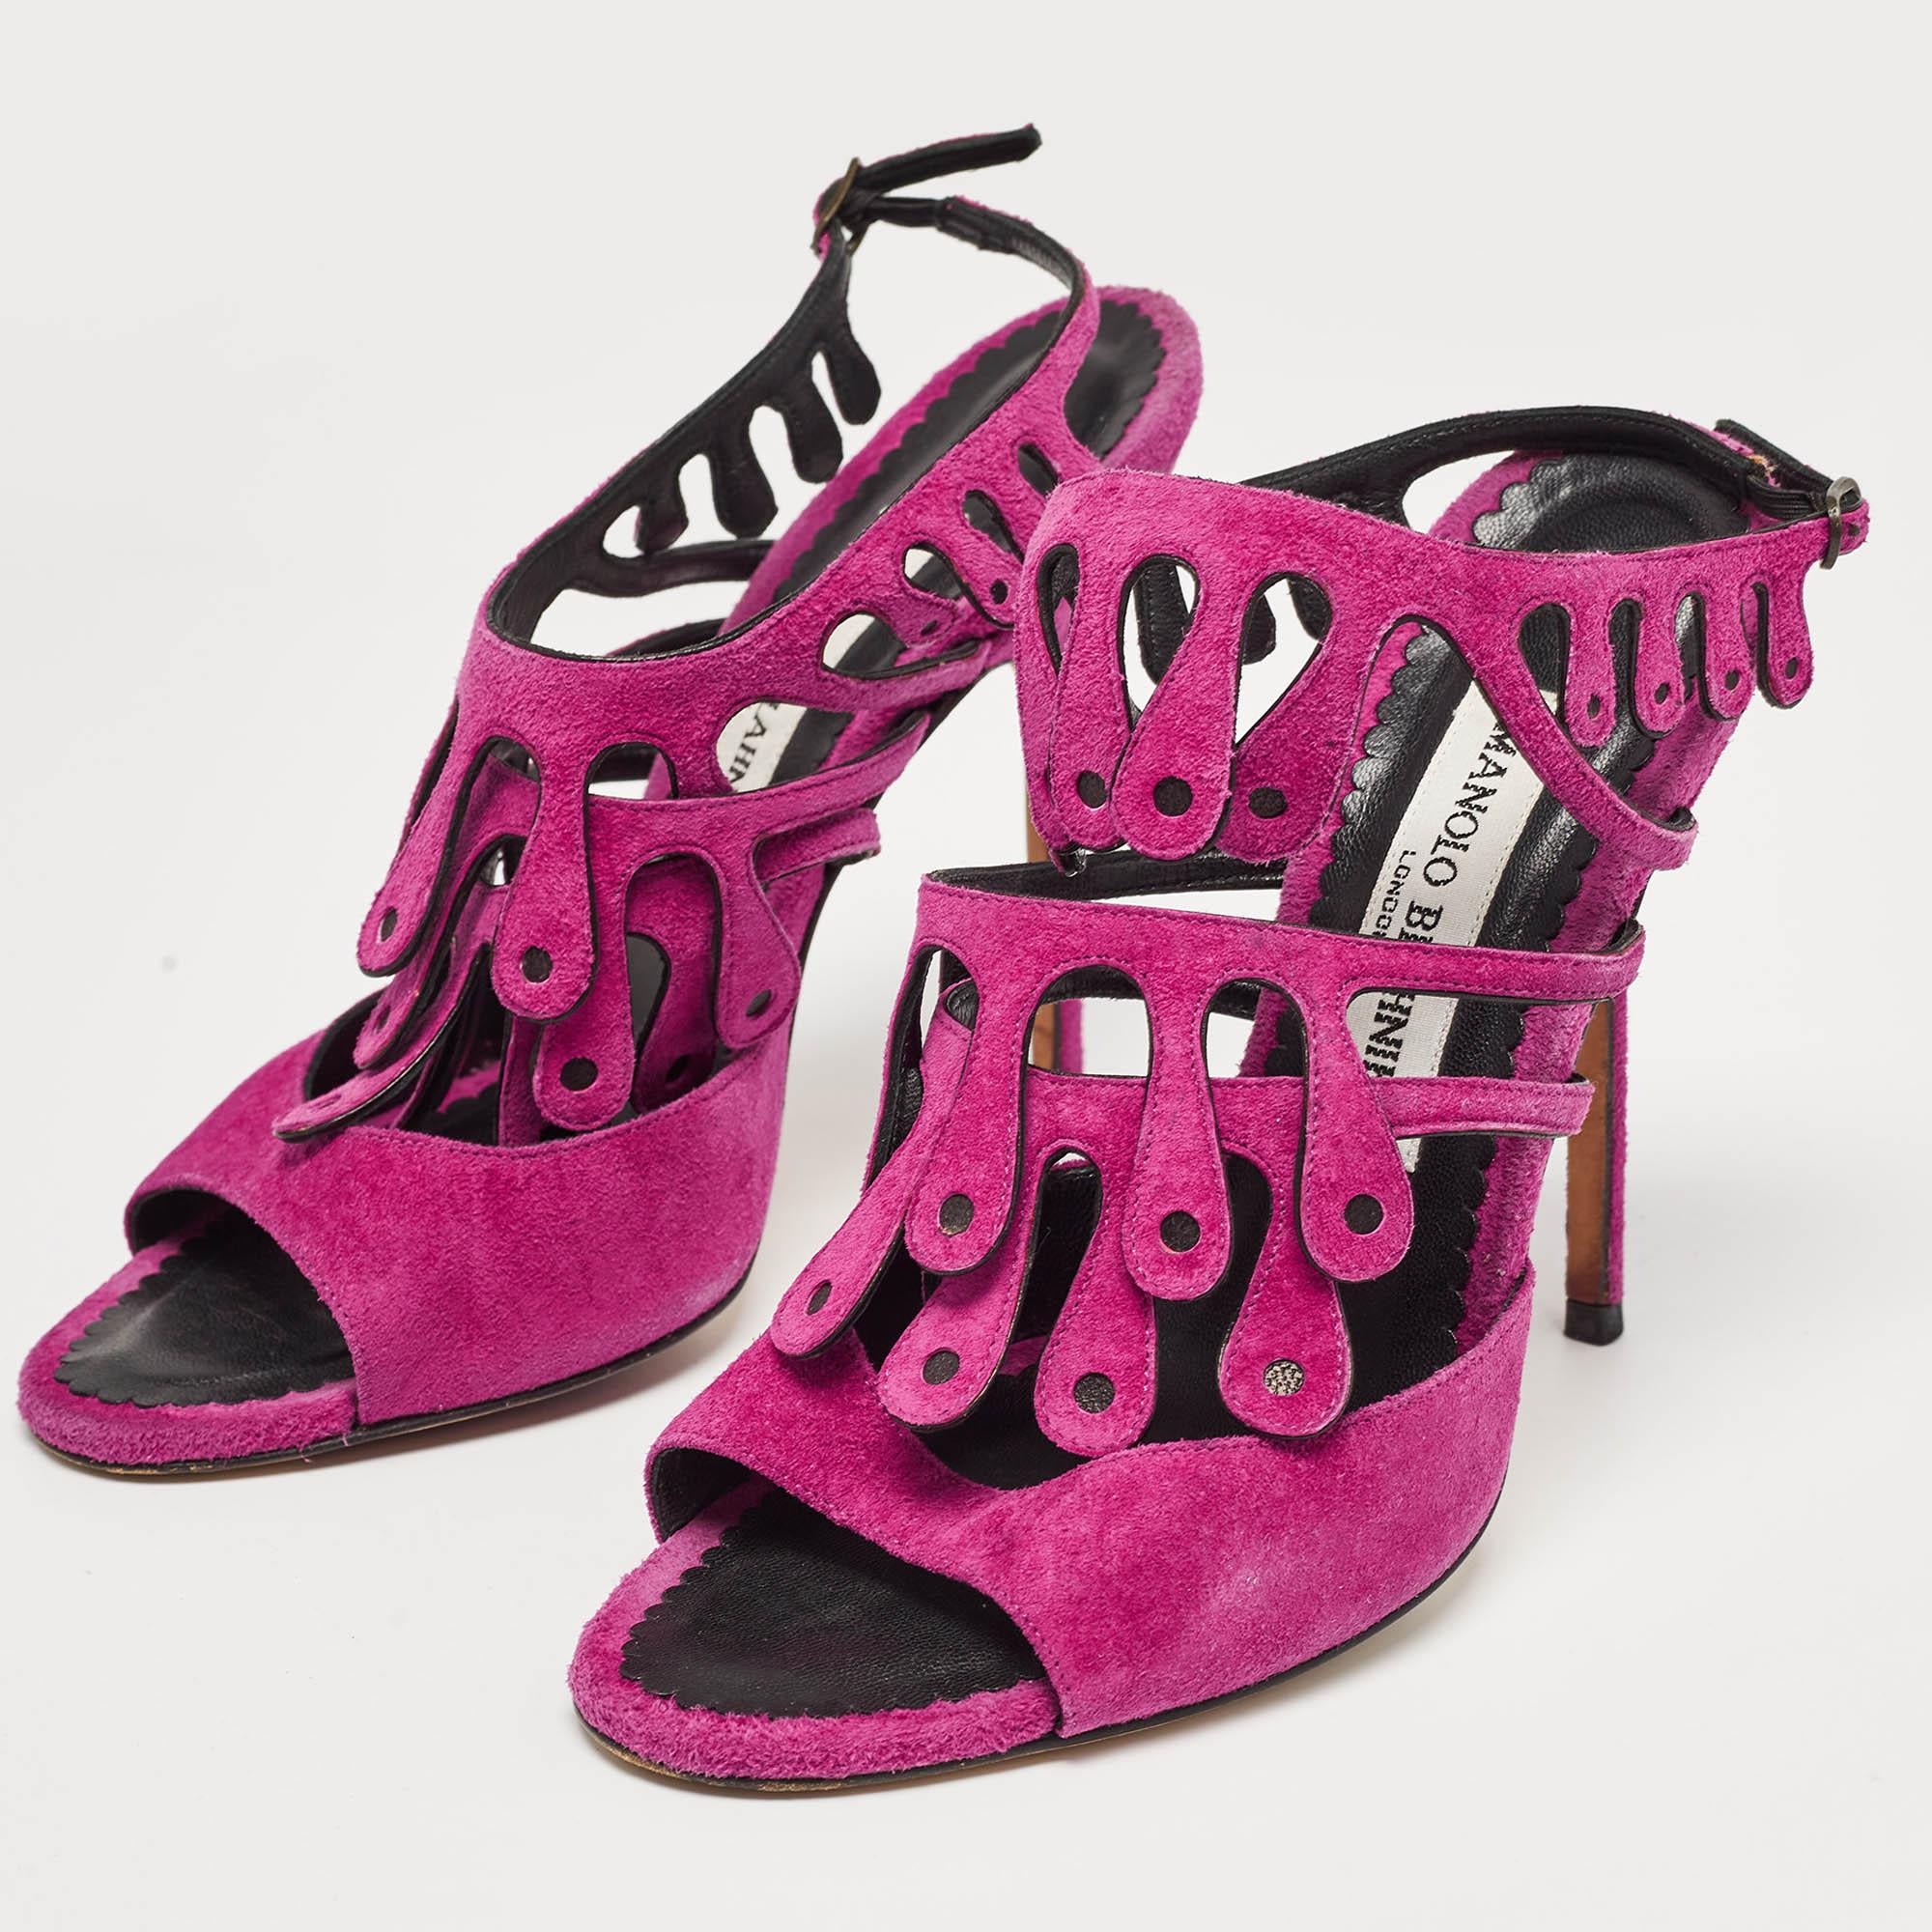 Manolo Blahnik Purple Suede Toubib Ankle Strap Sandals Size 36 For Sale 3